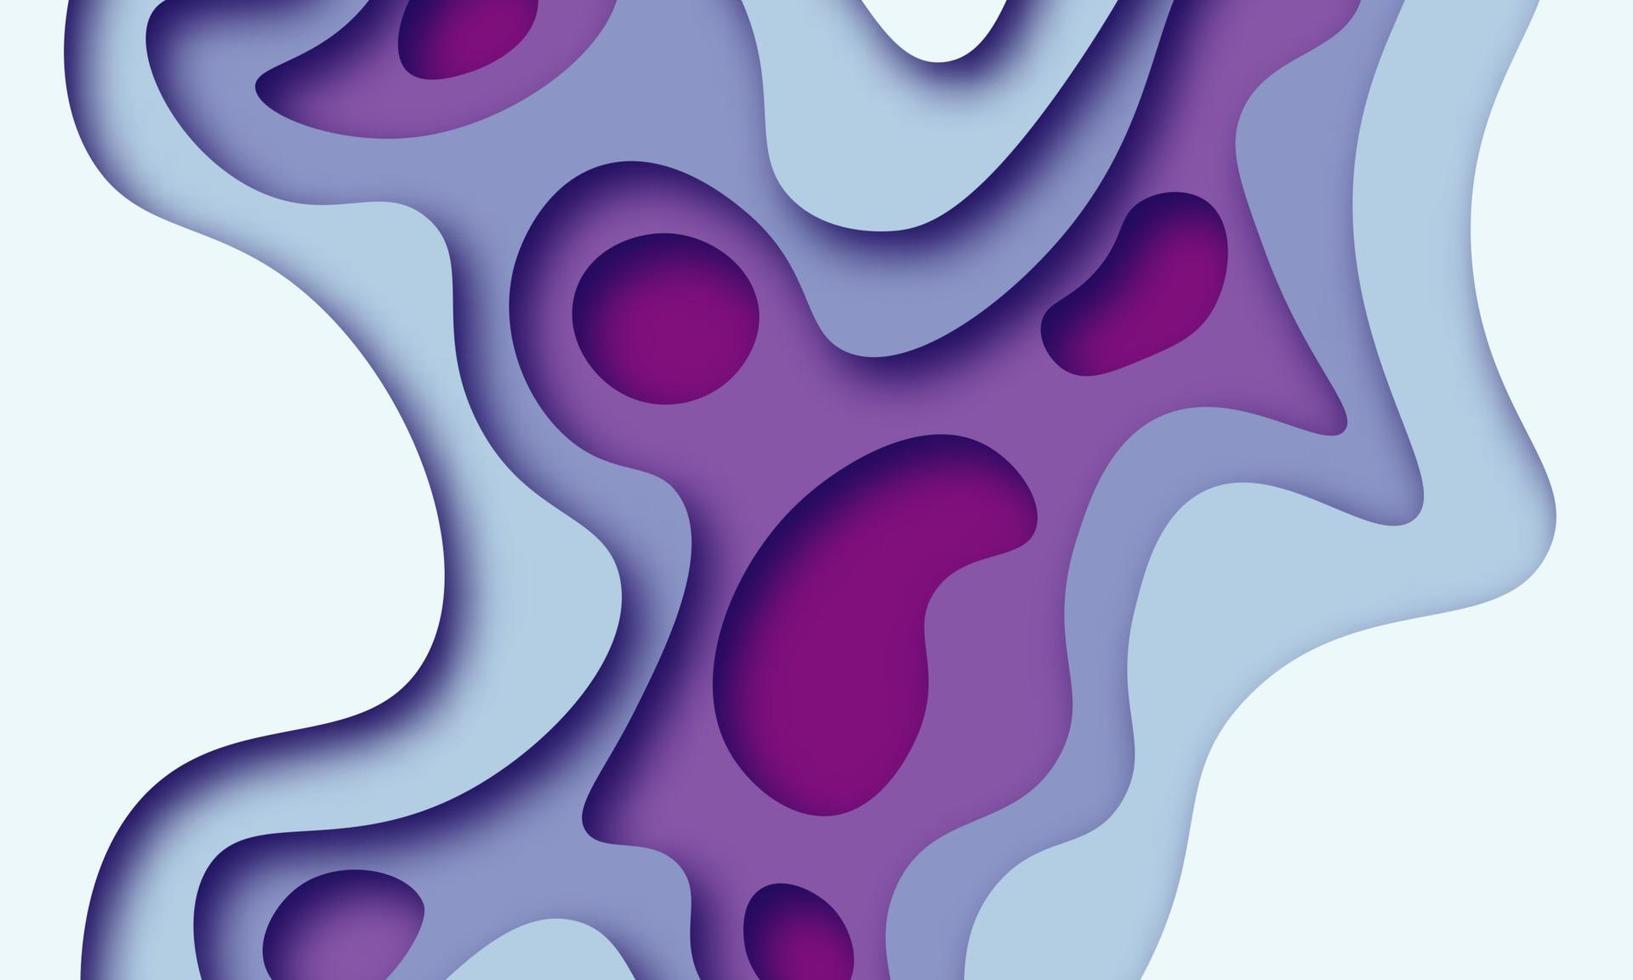 abstrakter hintergrund mit lila papierschnittformen fahnendesign. Vektor-Illustration. vektor